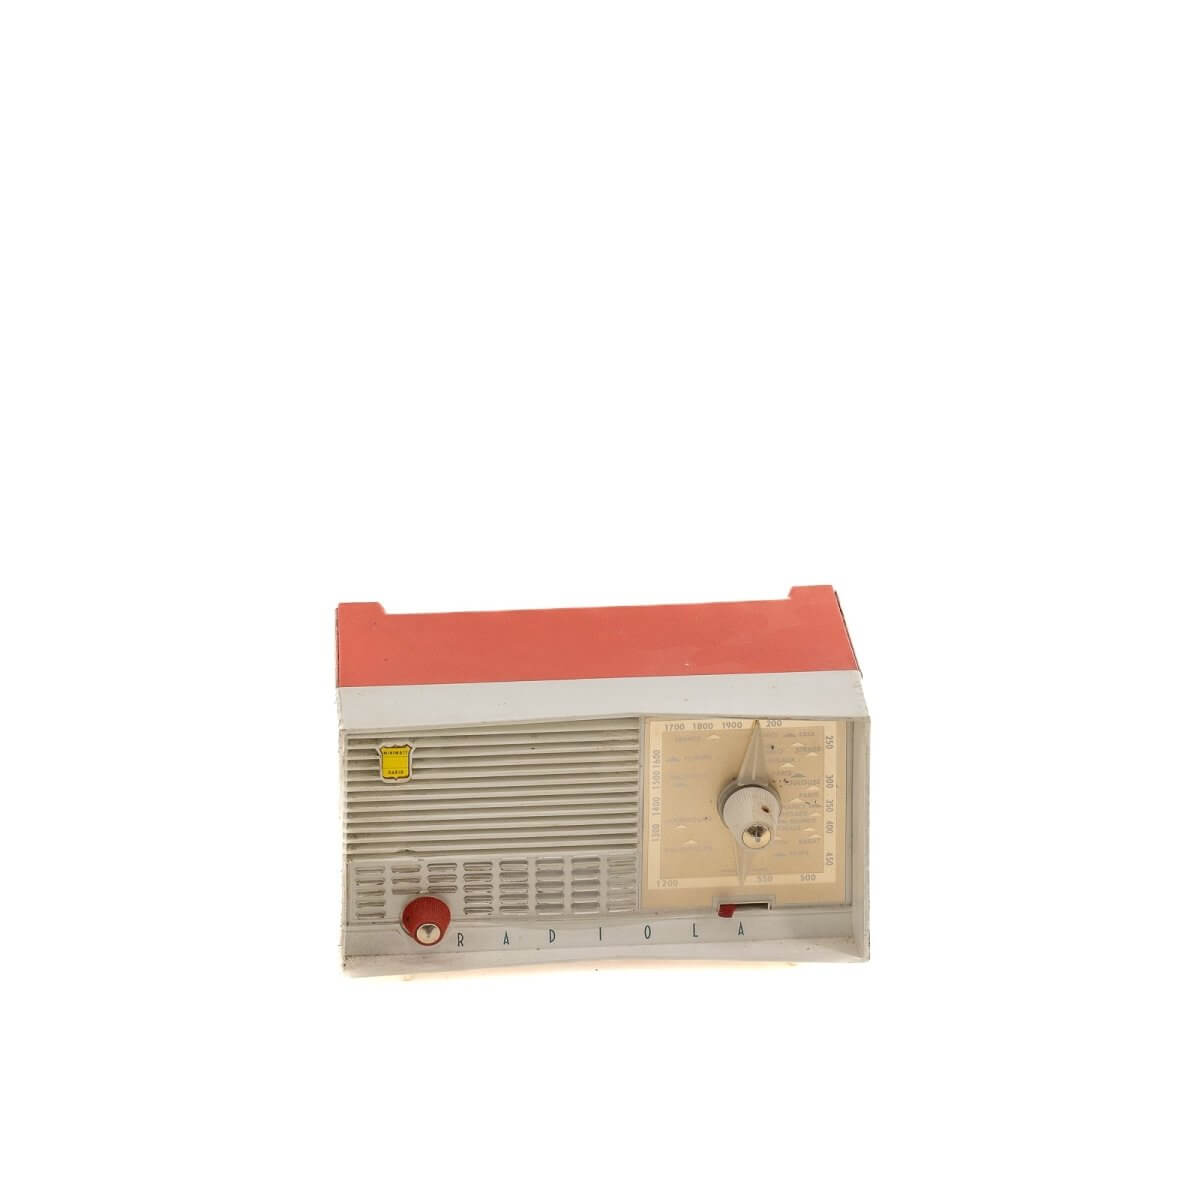 Transistor Bluetooth Radiola Vintage 50’S-A.bsolument-enceintes-et-radios-vintage-bluetooth